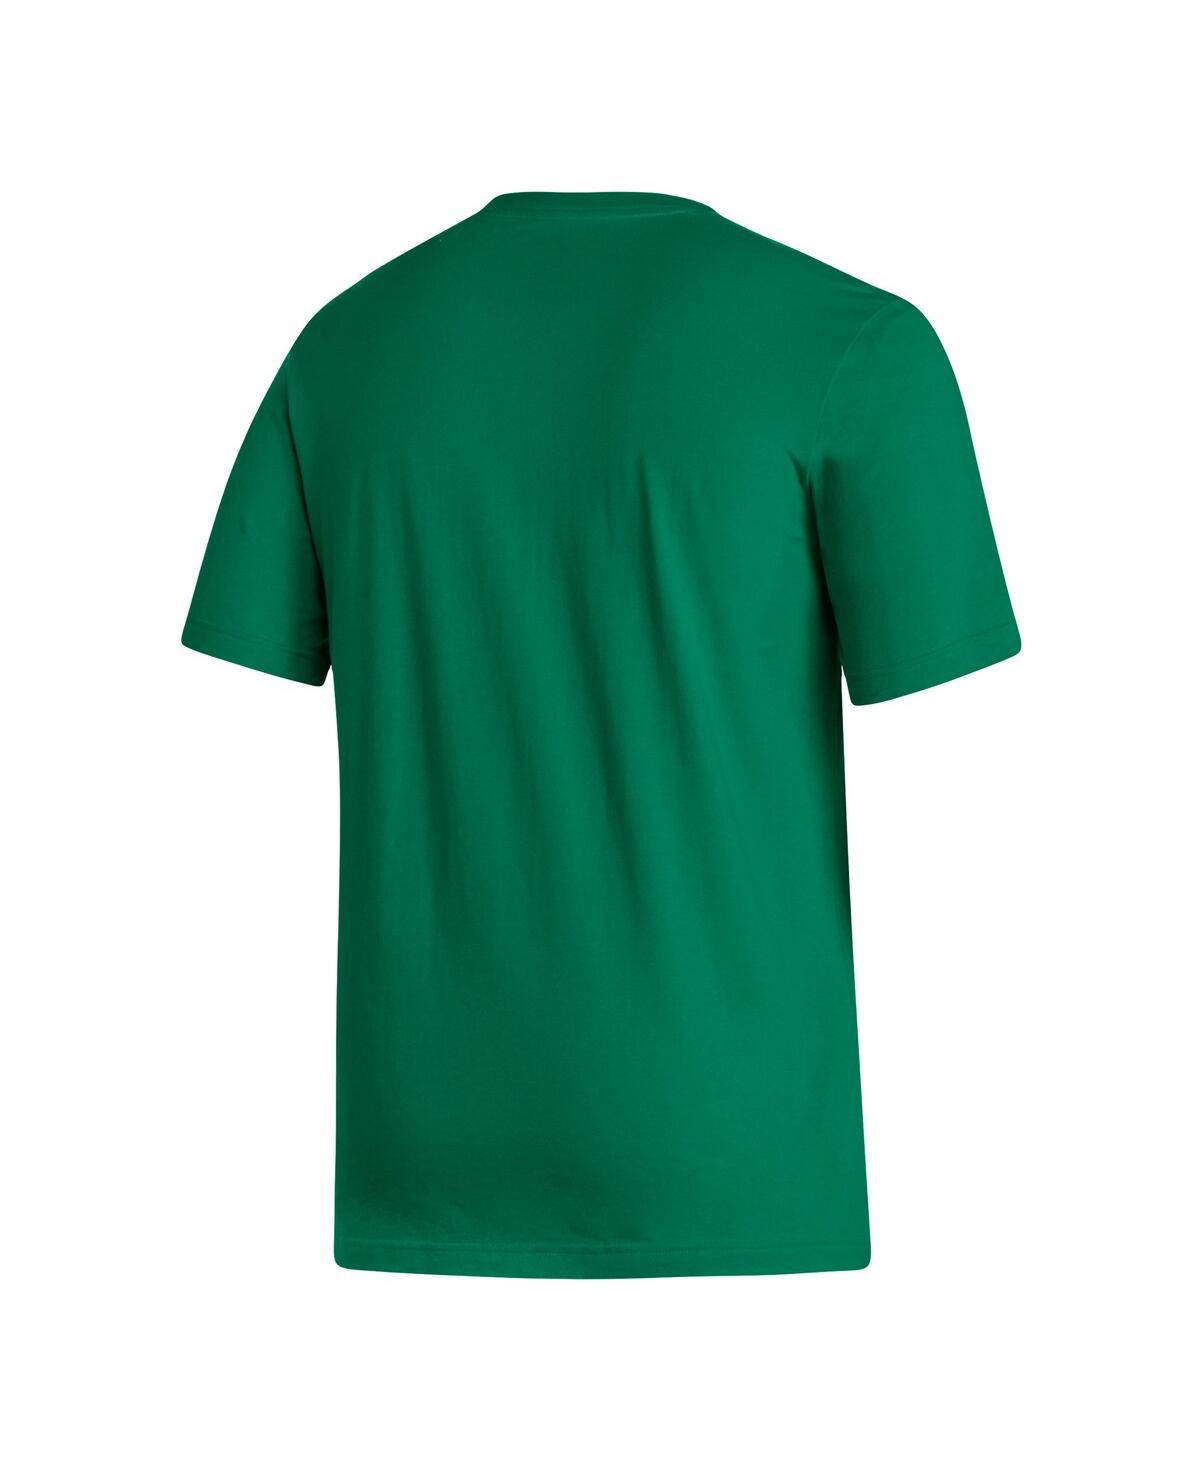 Shop Adidas Originals Men's Adidas Kelly Green Mexico National Team Crest T-shirt